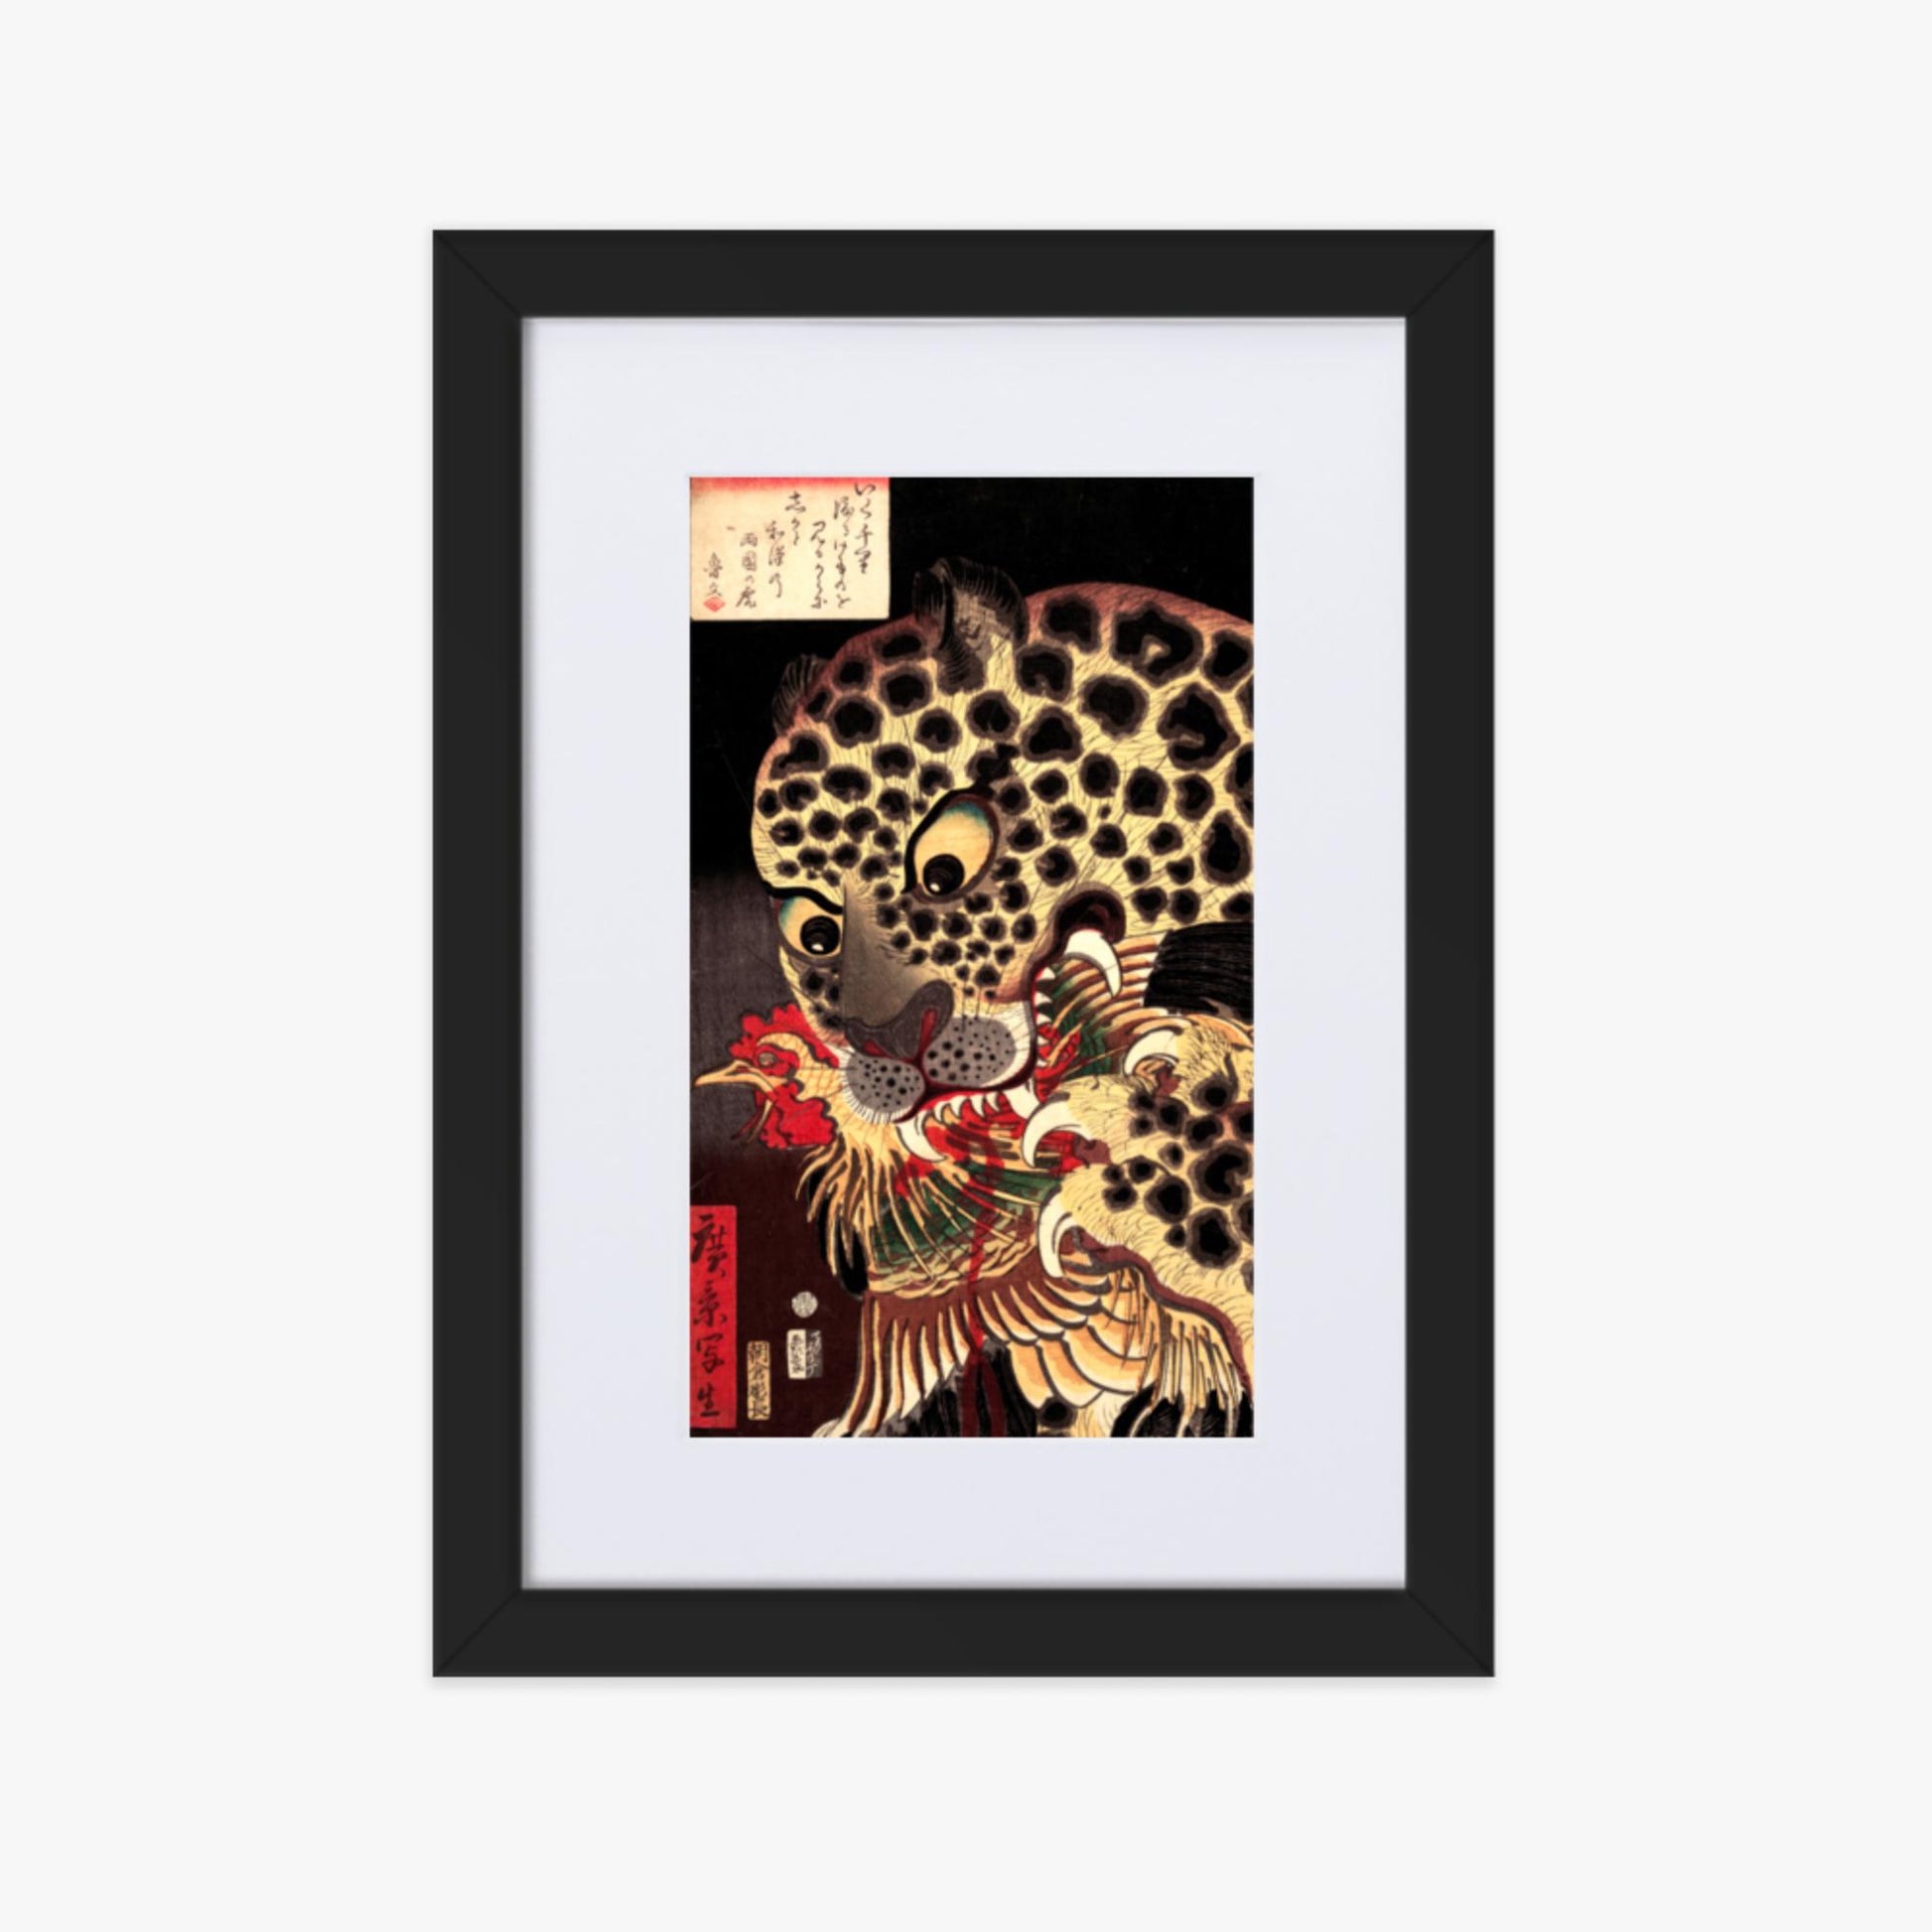 Utagawa Hirokage - The Tiger of Ryōkoku 21x30 cm Poster With Black Frame